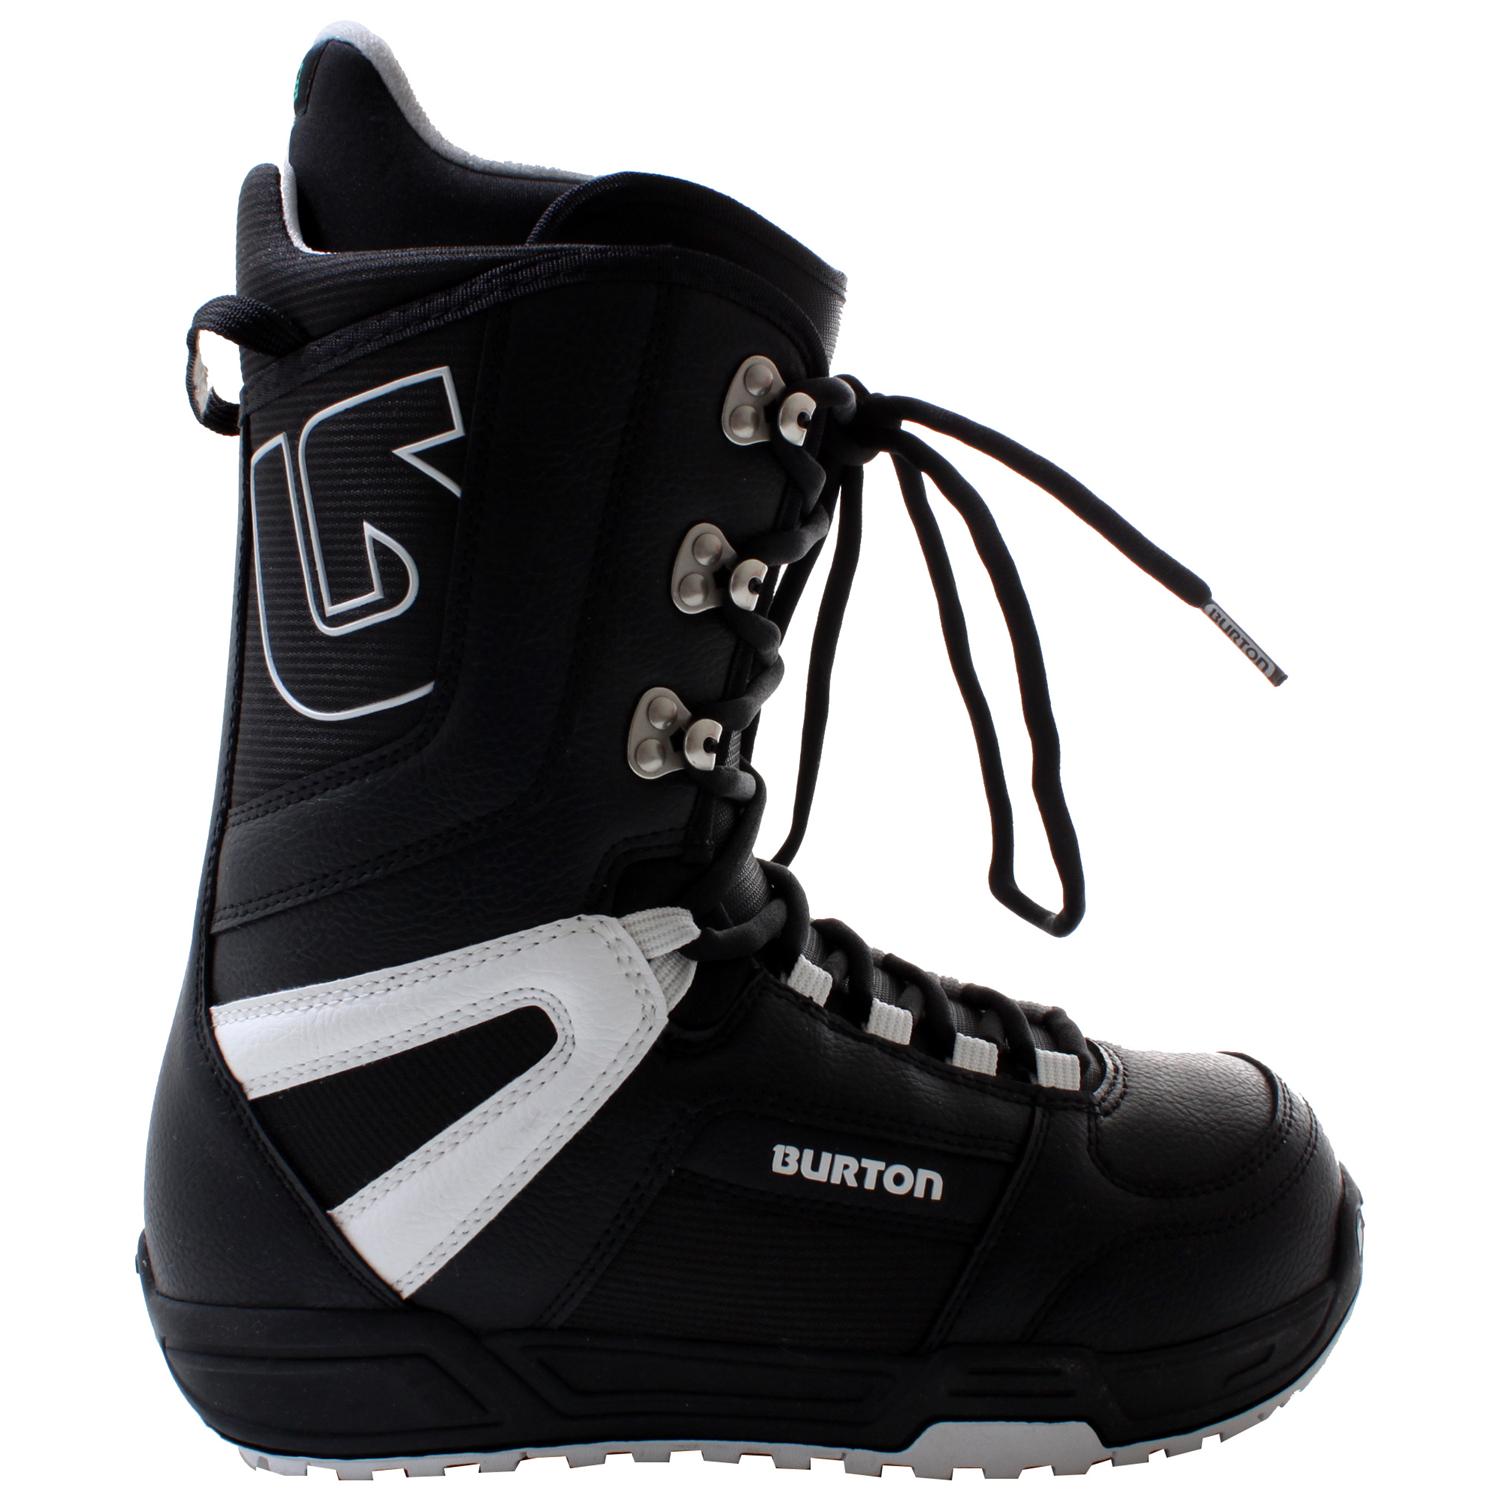 Burton Tribute Snowboard Boots - Demo 2008 | evo outlet